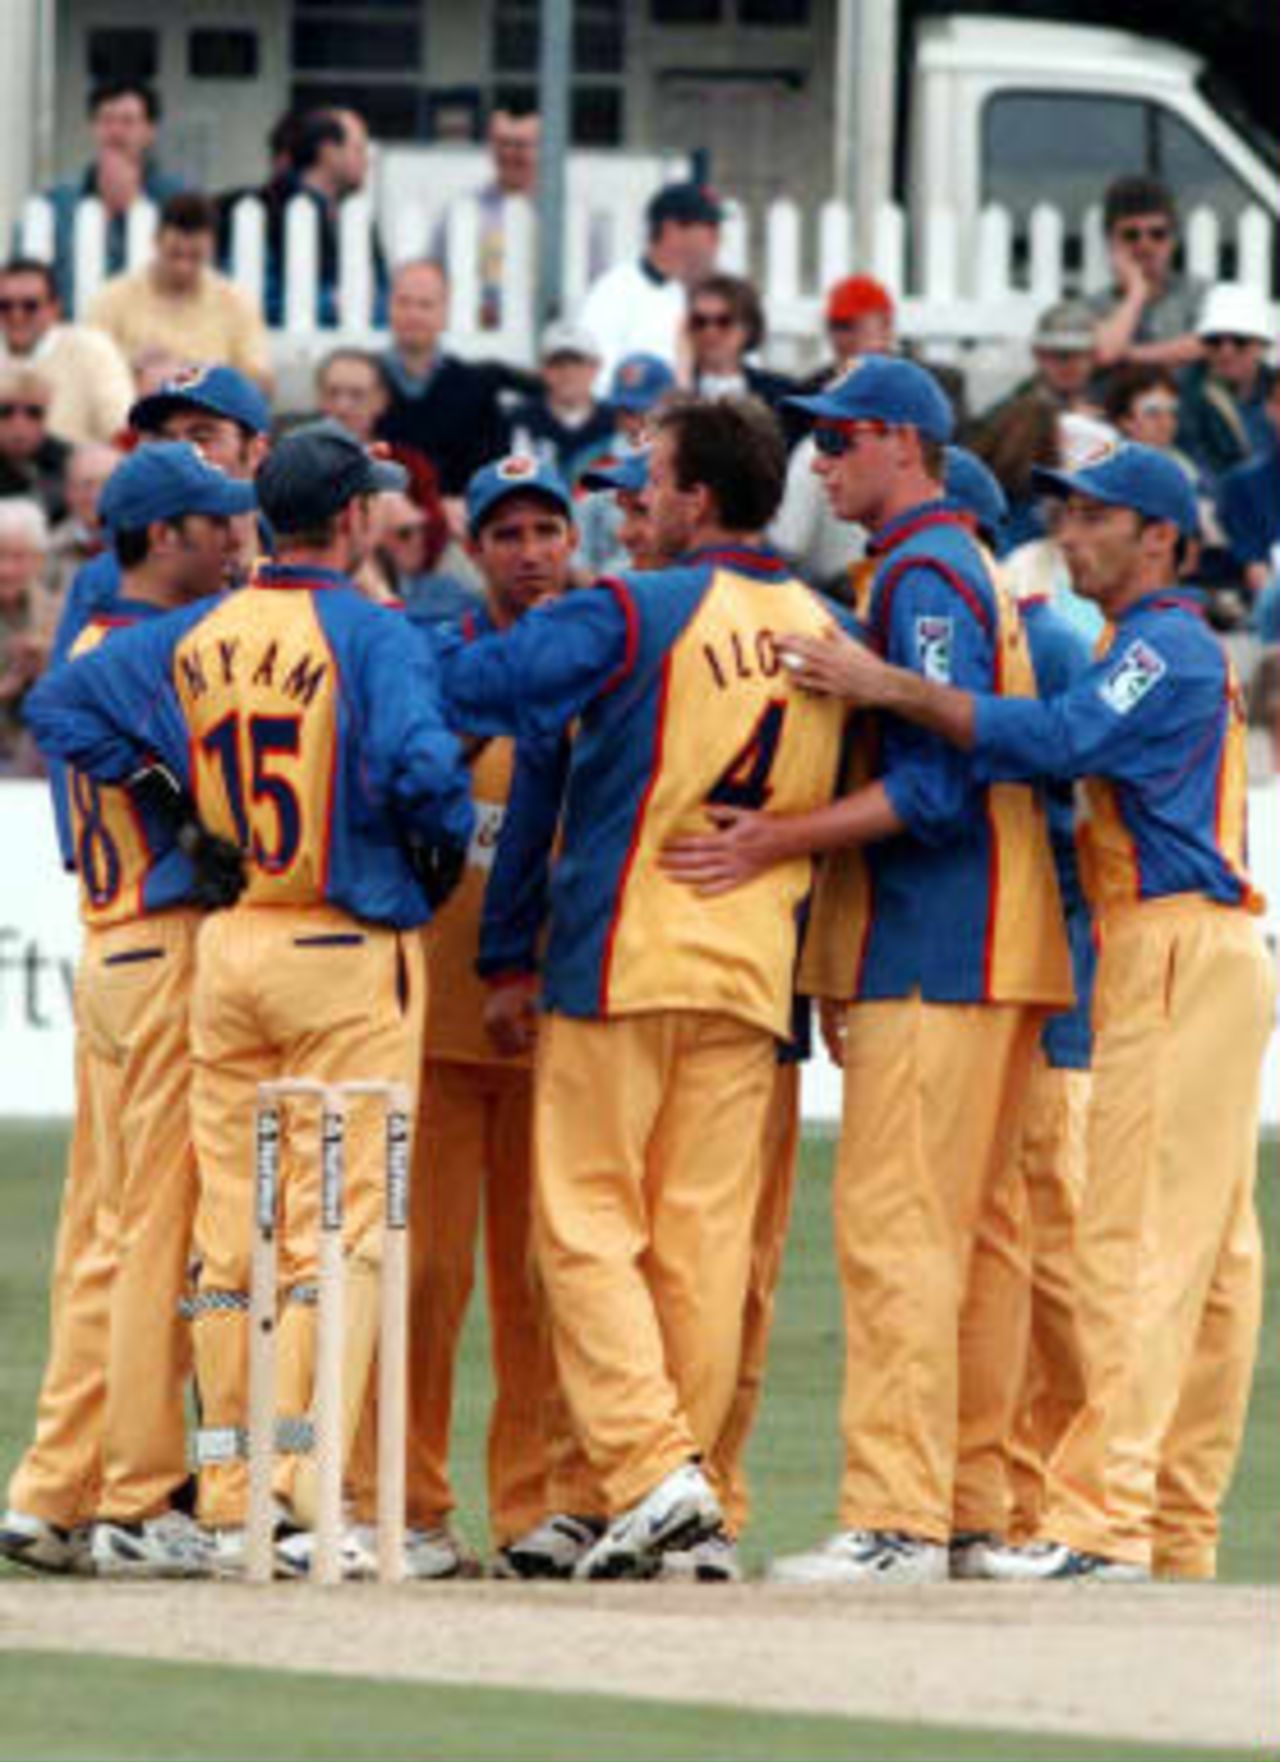 Essex celebrate Nick Knight's wicket - World Cup warm-up match, England v Essex, Chelmsford, Essex, 09 May 1999.